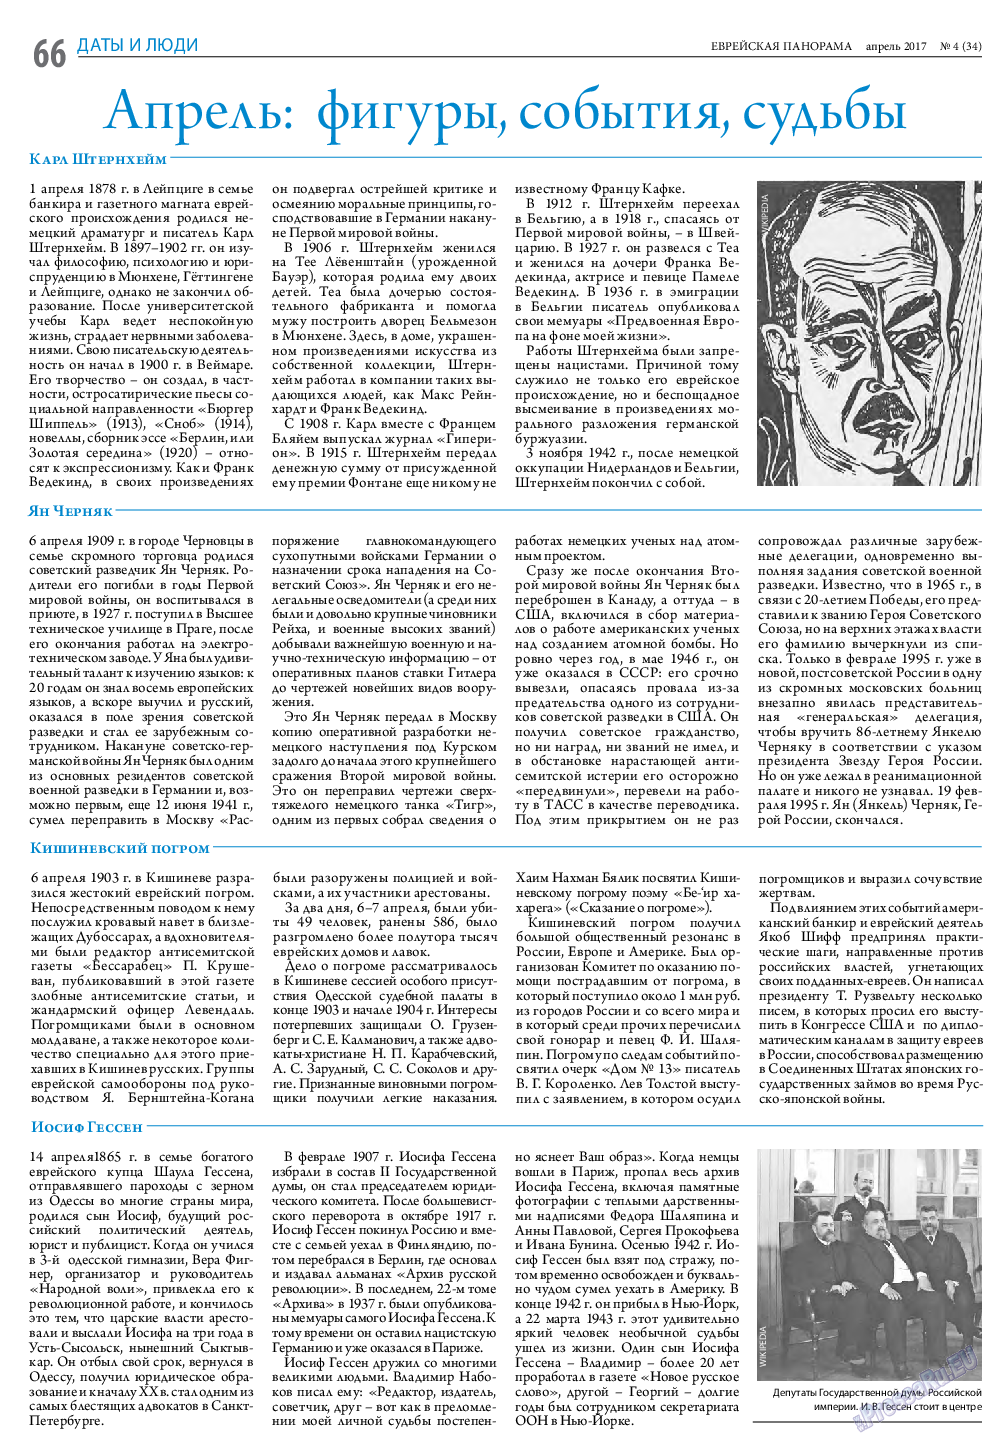 Еврейская панорама, газета. 2017 №4 стр.66